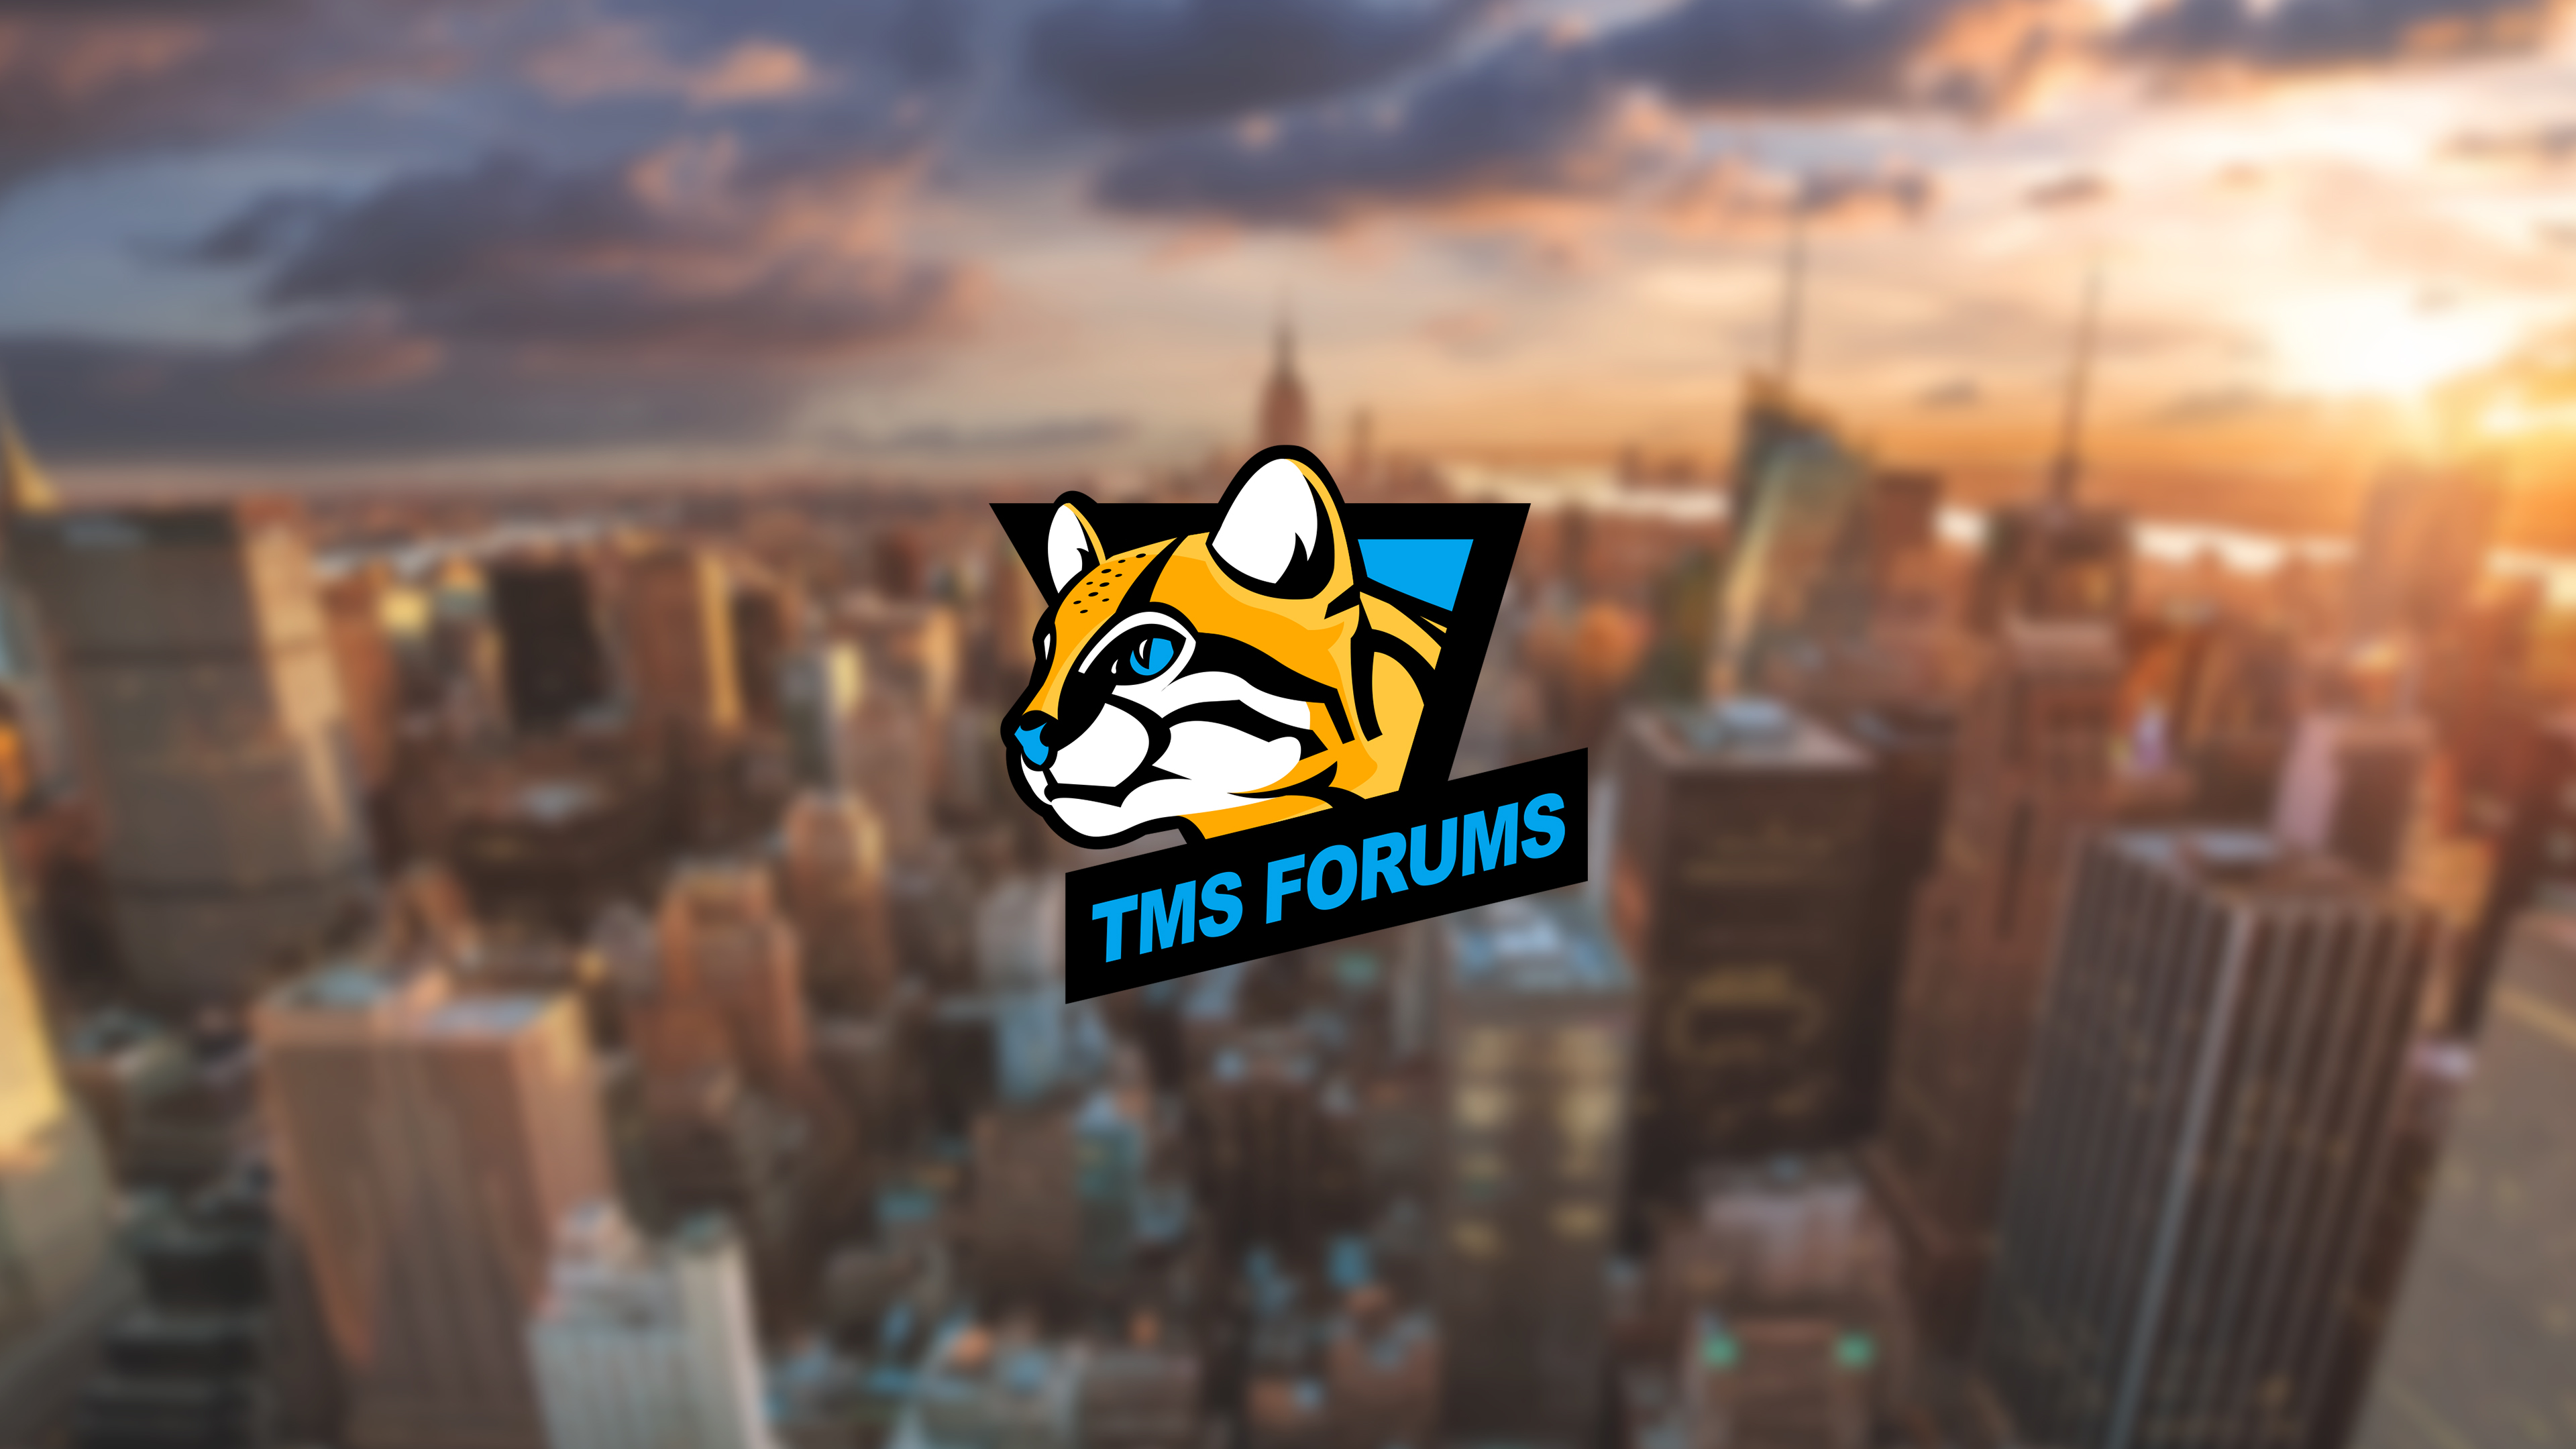 TMS Forums Logo Wallpaper City New York.jpg